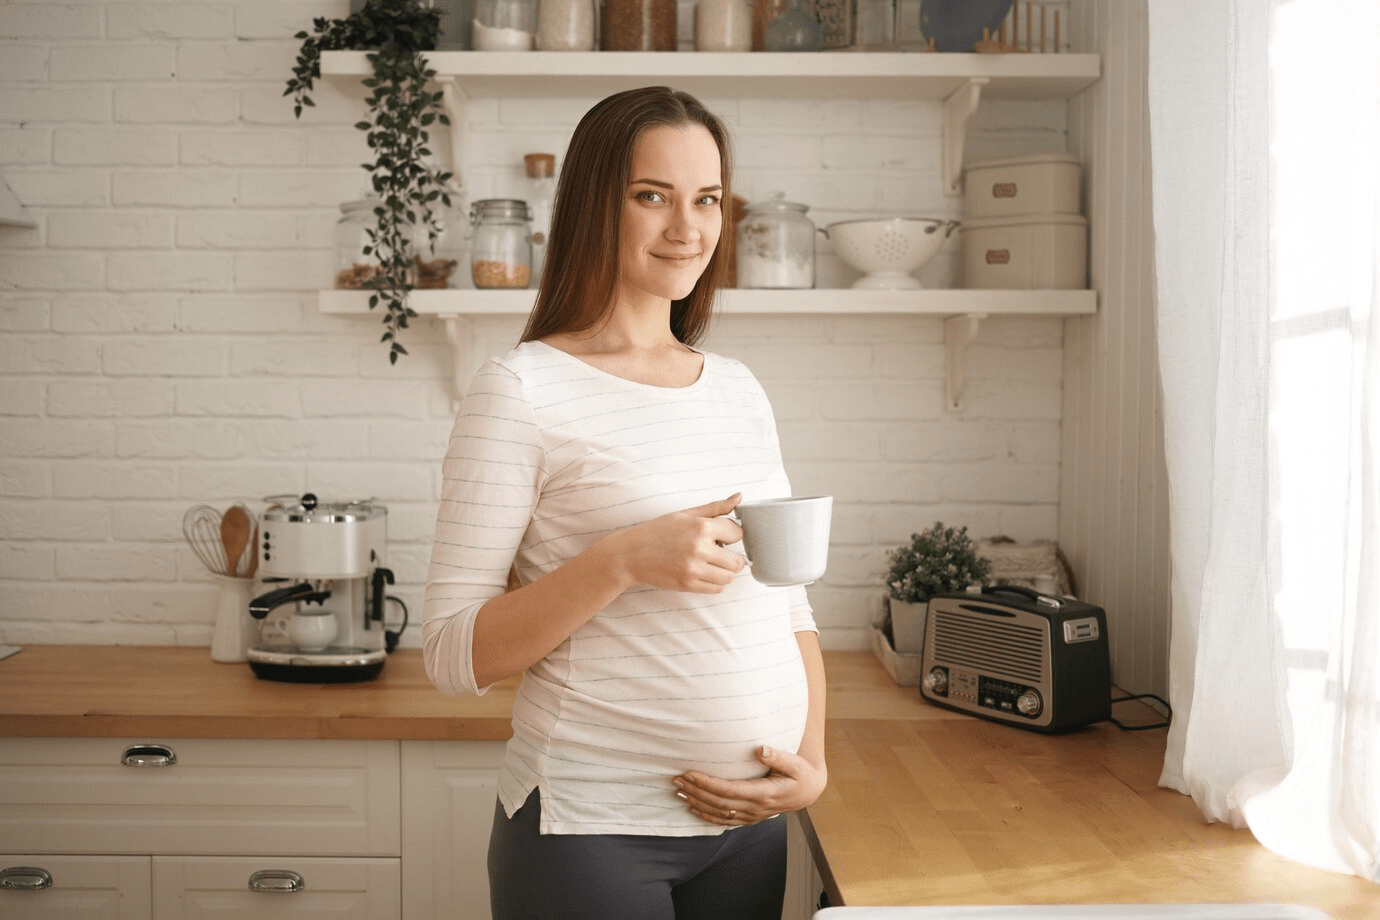 Should one drink turmeric milk during pregnancy or not (Image Source: Freepik)